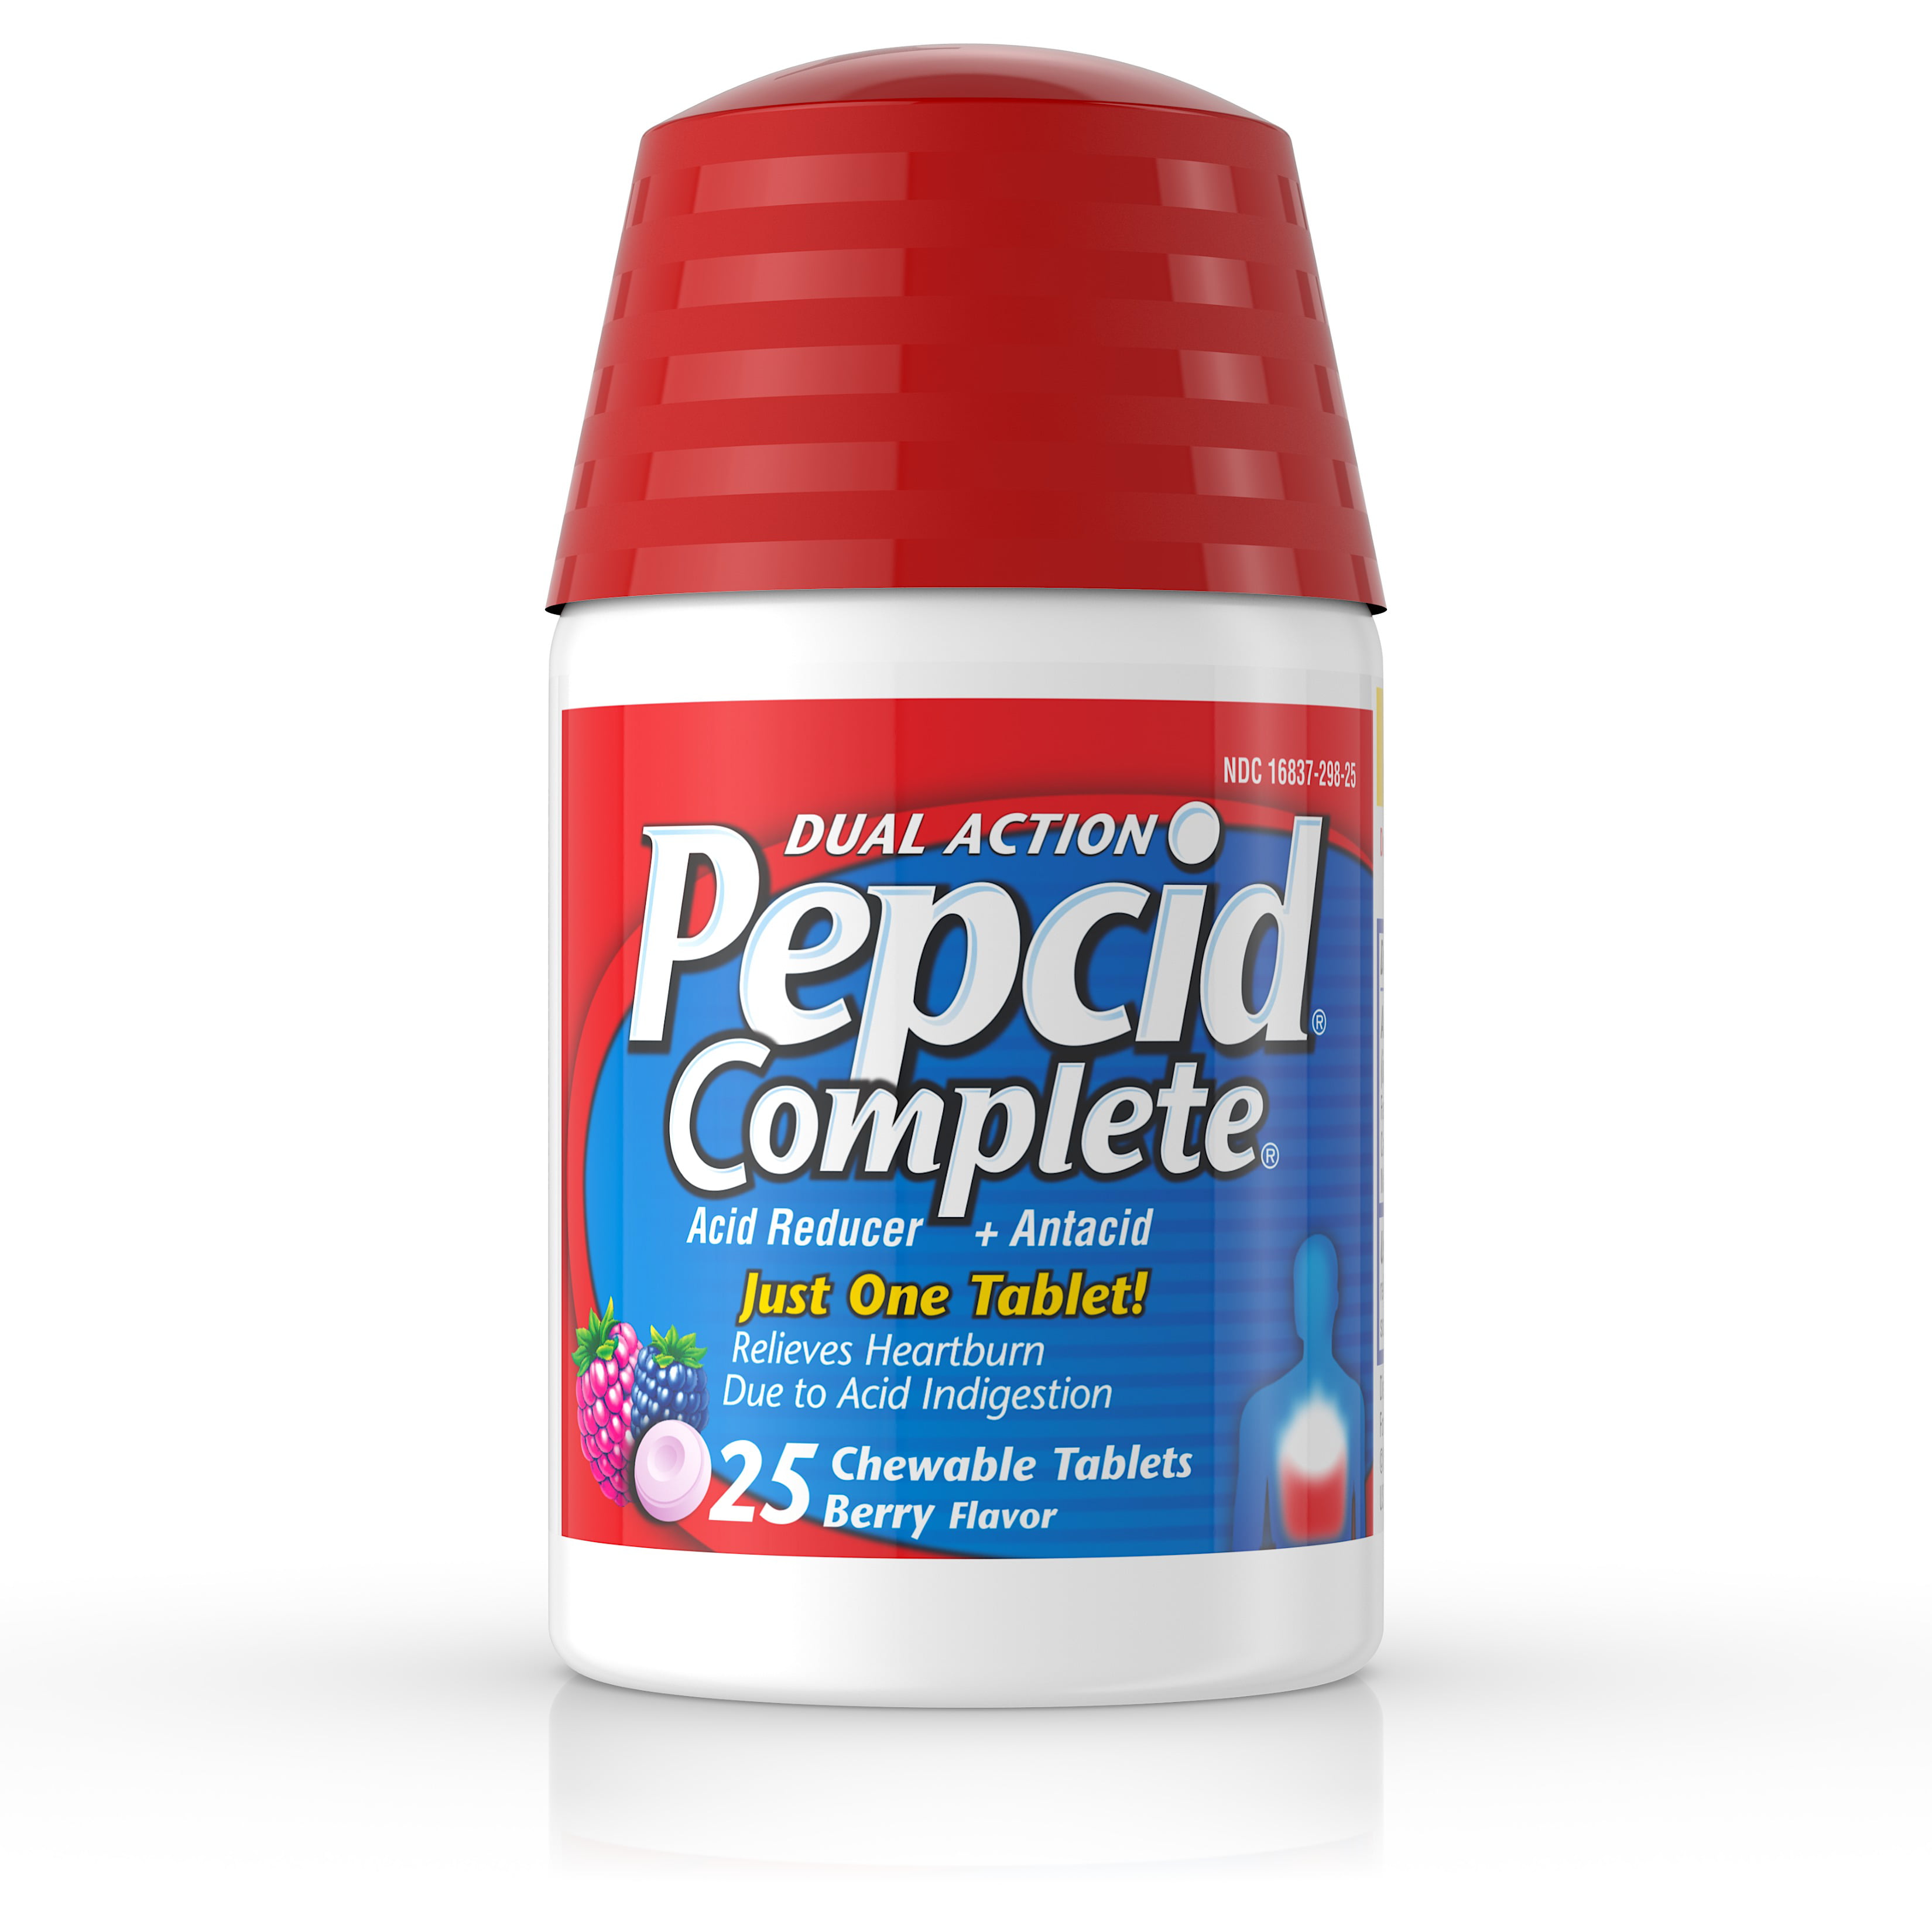 is pepcid complete good for acid reflux